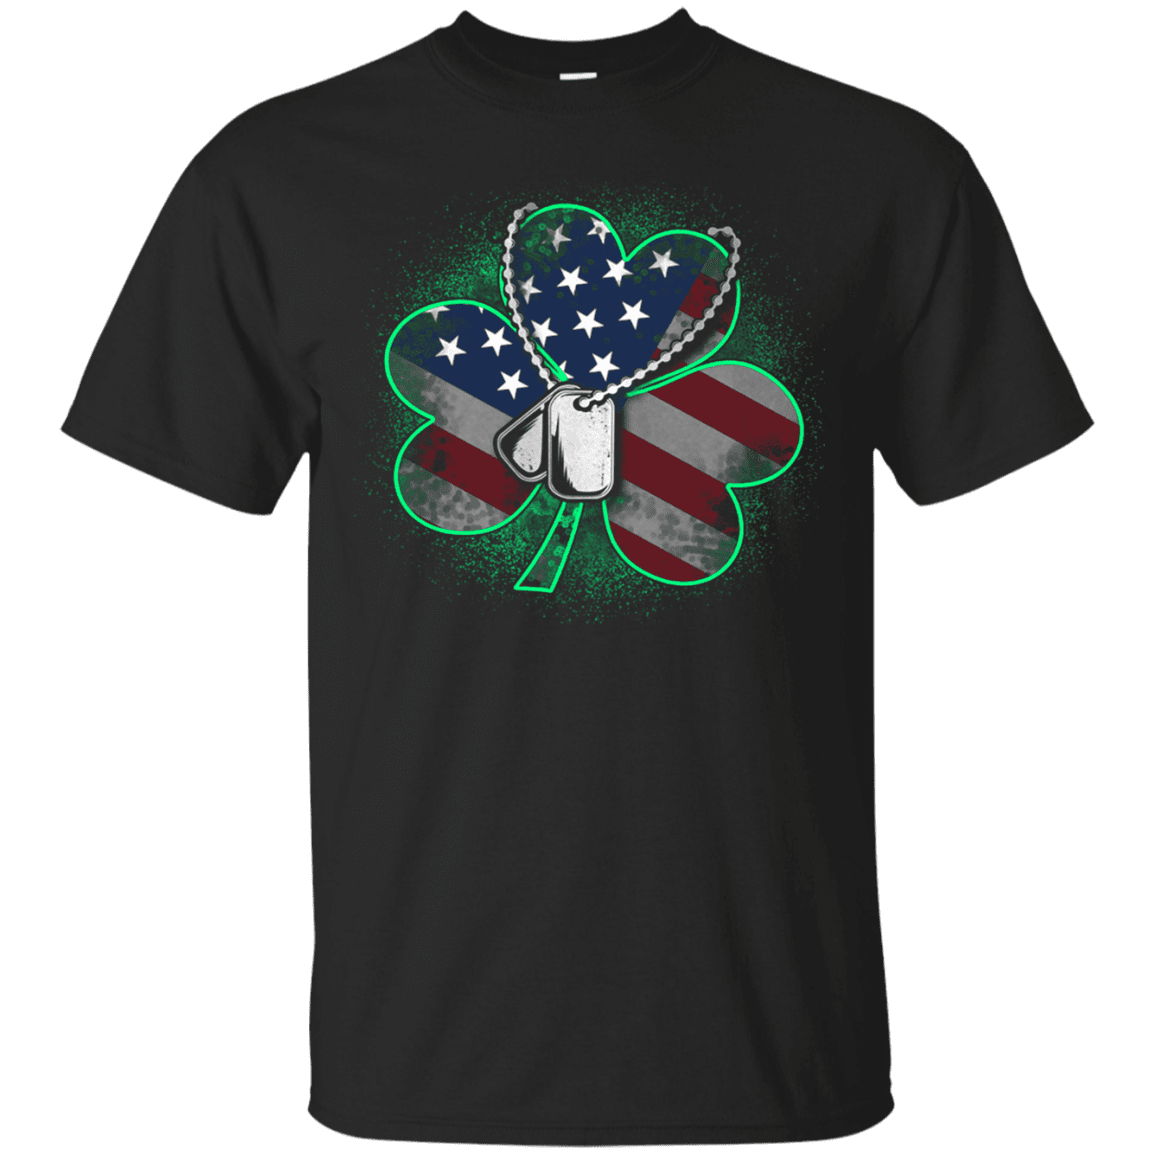 Military T-Shirt "THE LUCKY PATRICK DAY VETERAN"-TShirt-General-Veterans Nation